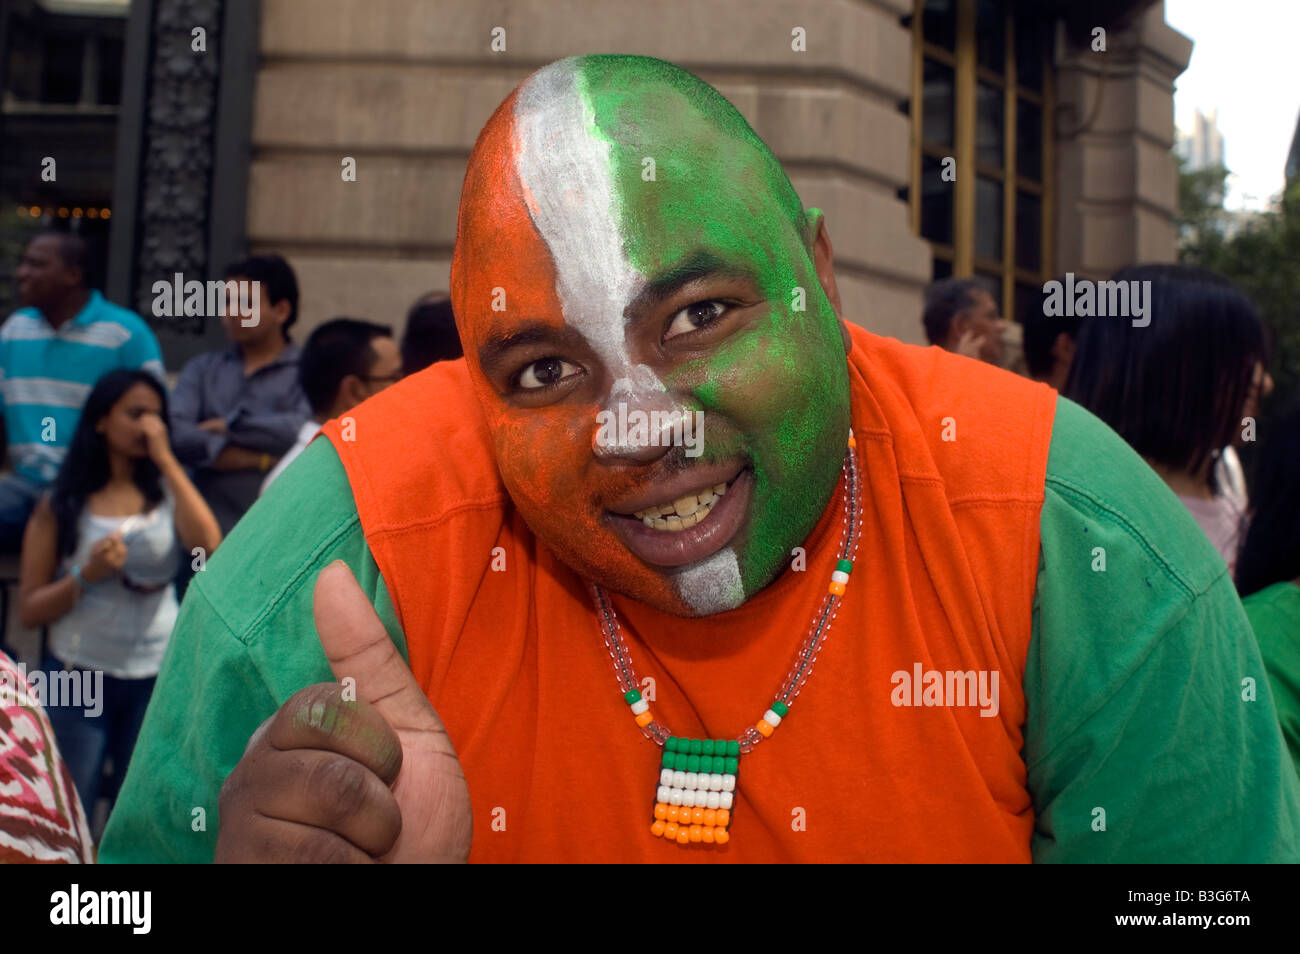 Parade watcher withface verniciato nei colori della bandiera indiana orologi Indian Independence Day Parade Foto Stock